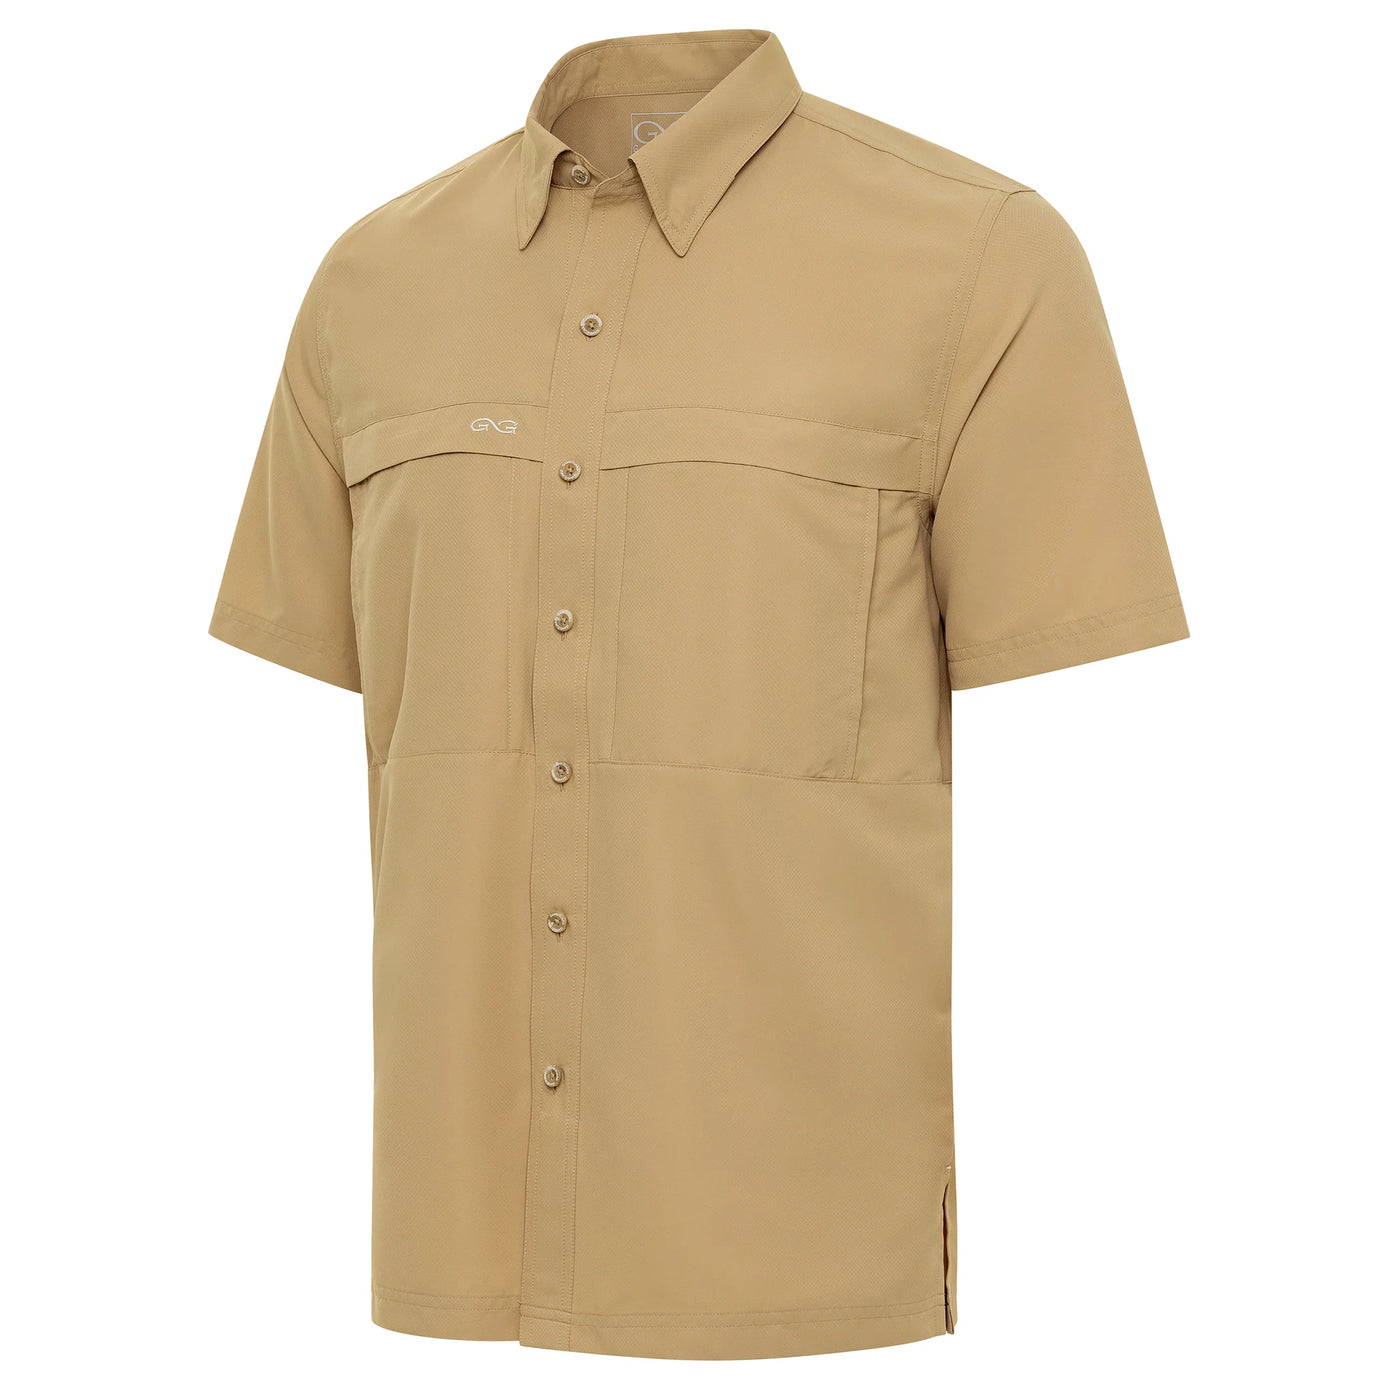 Gameguard Khaki Microfiber Short Sleeve Relaxed Fit Shirt